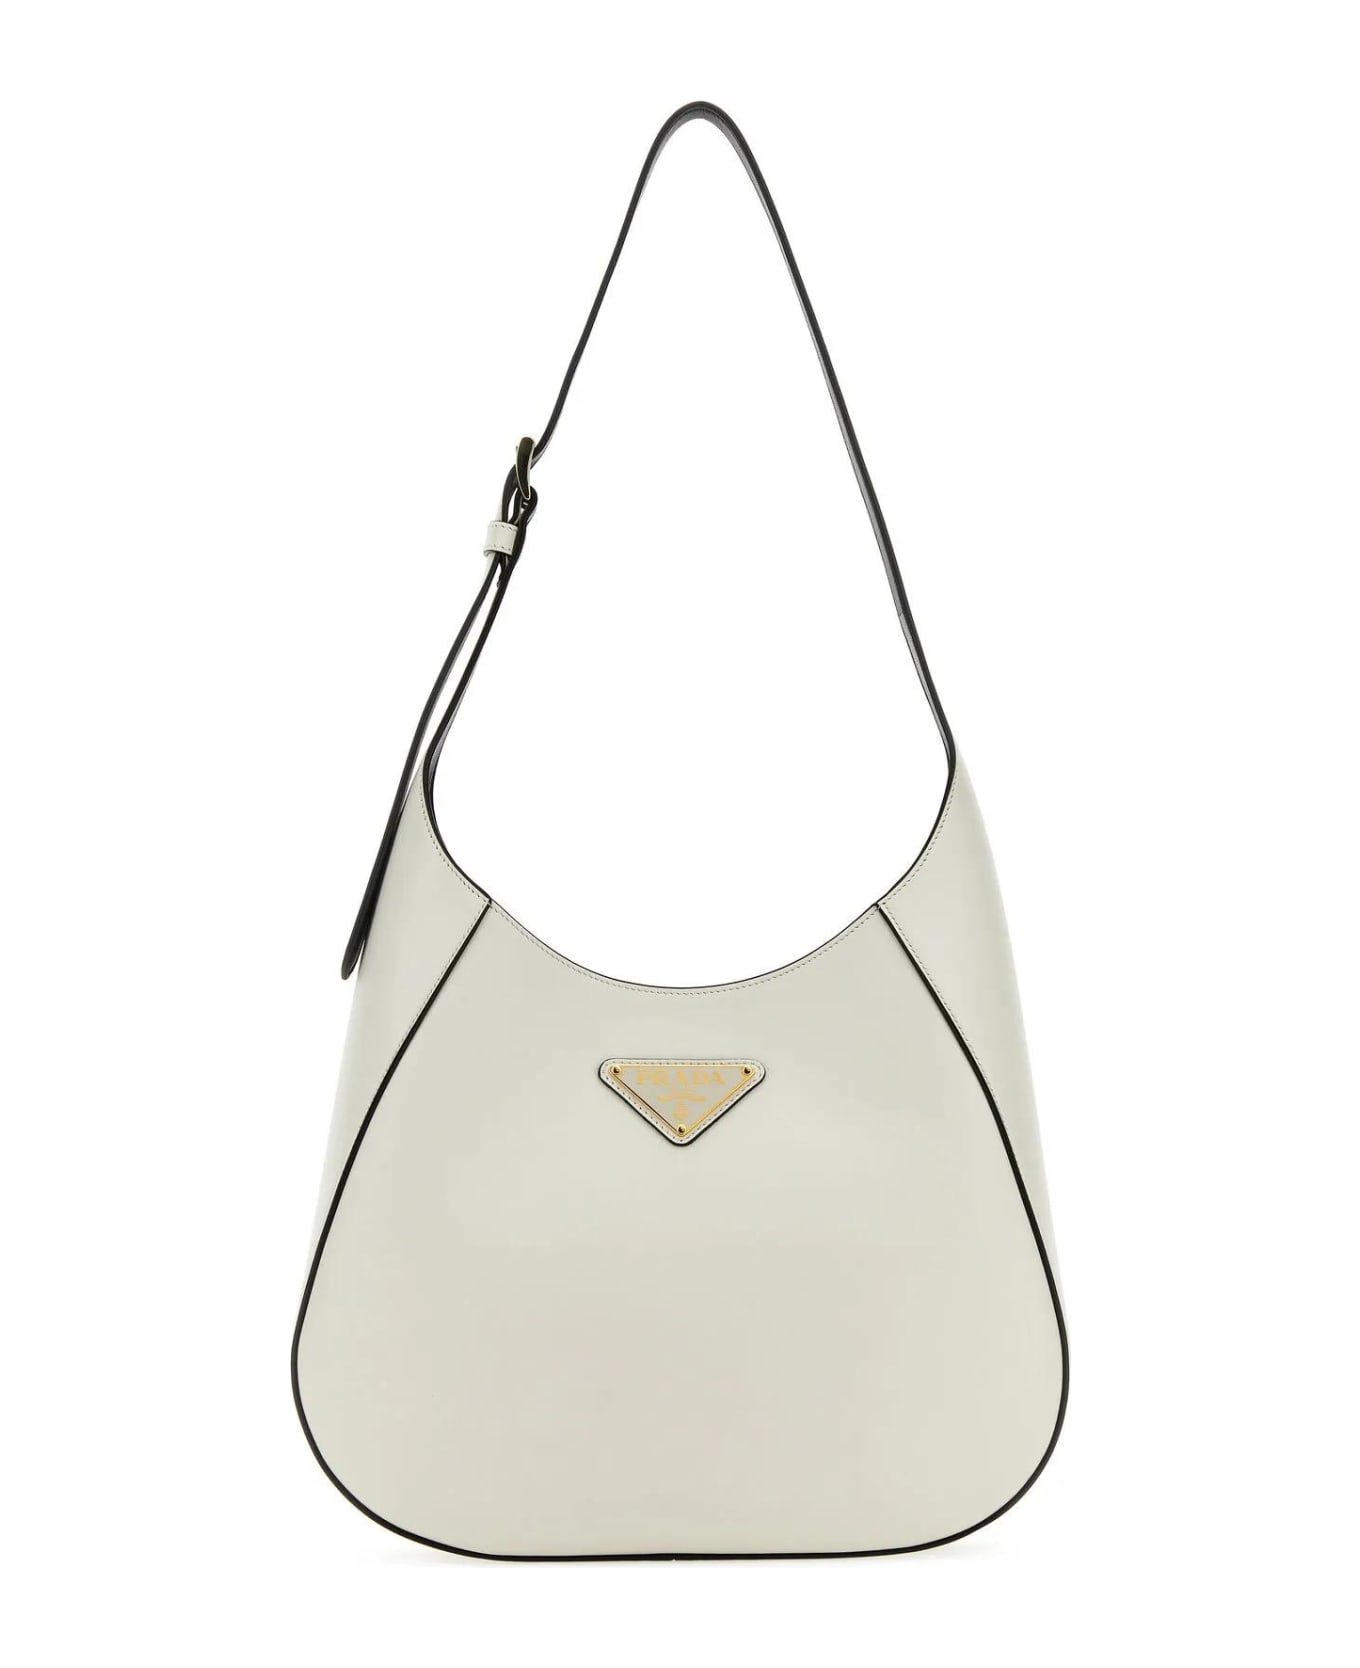 Prada White Leather Shoulder Bag - White